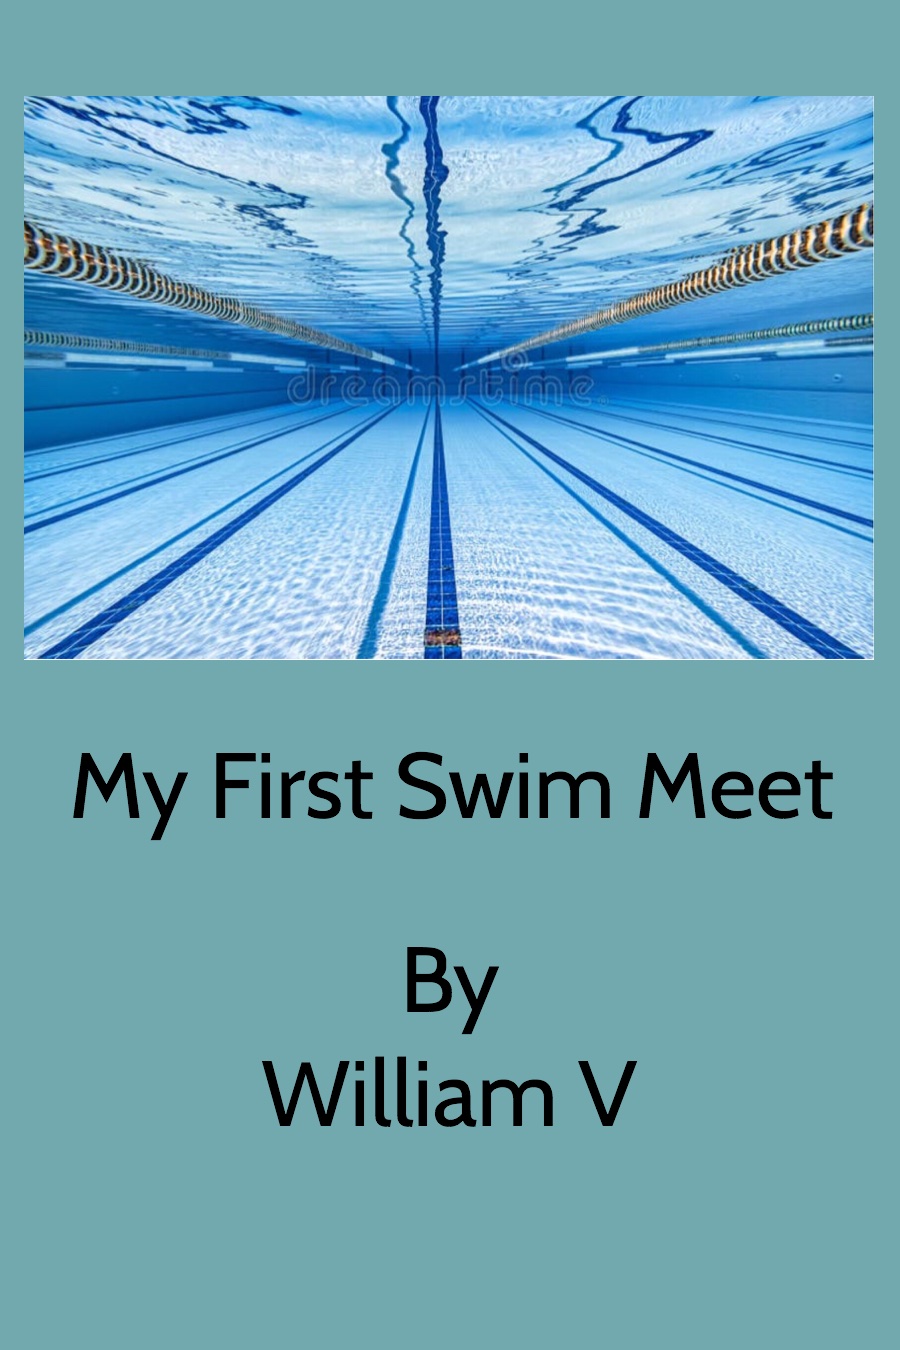 My First Swim Meet by William V